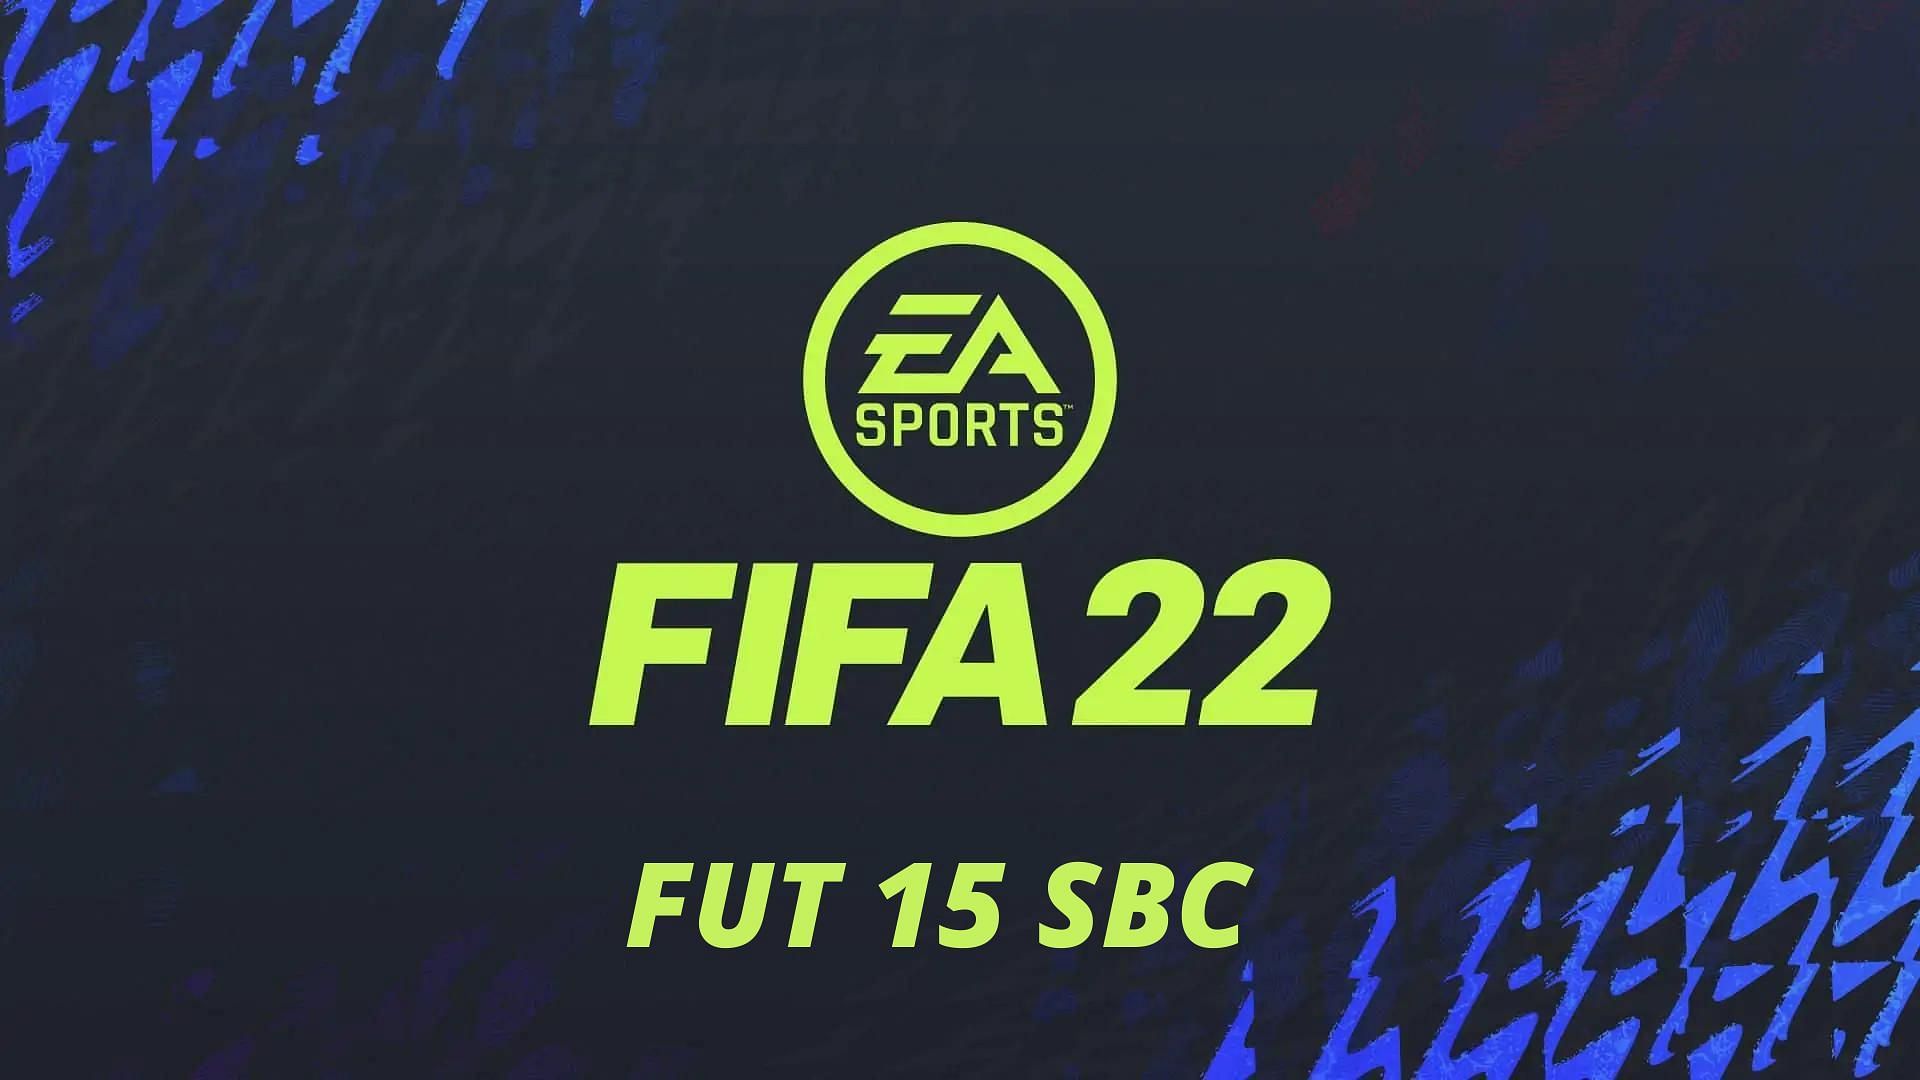 FUT 15 SBC is live in FIFA 22 (Image via Sportskeeda)